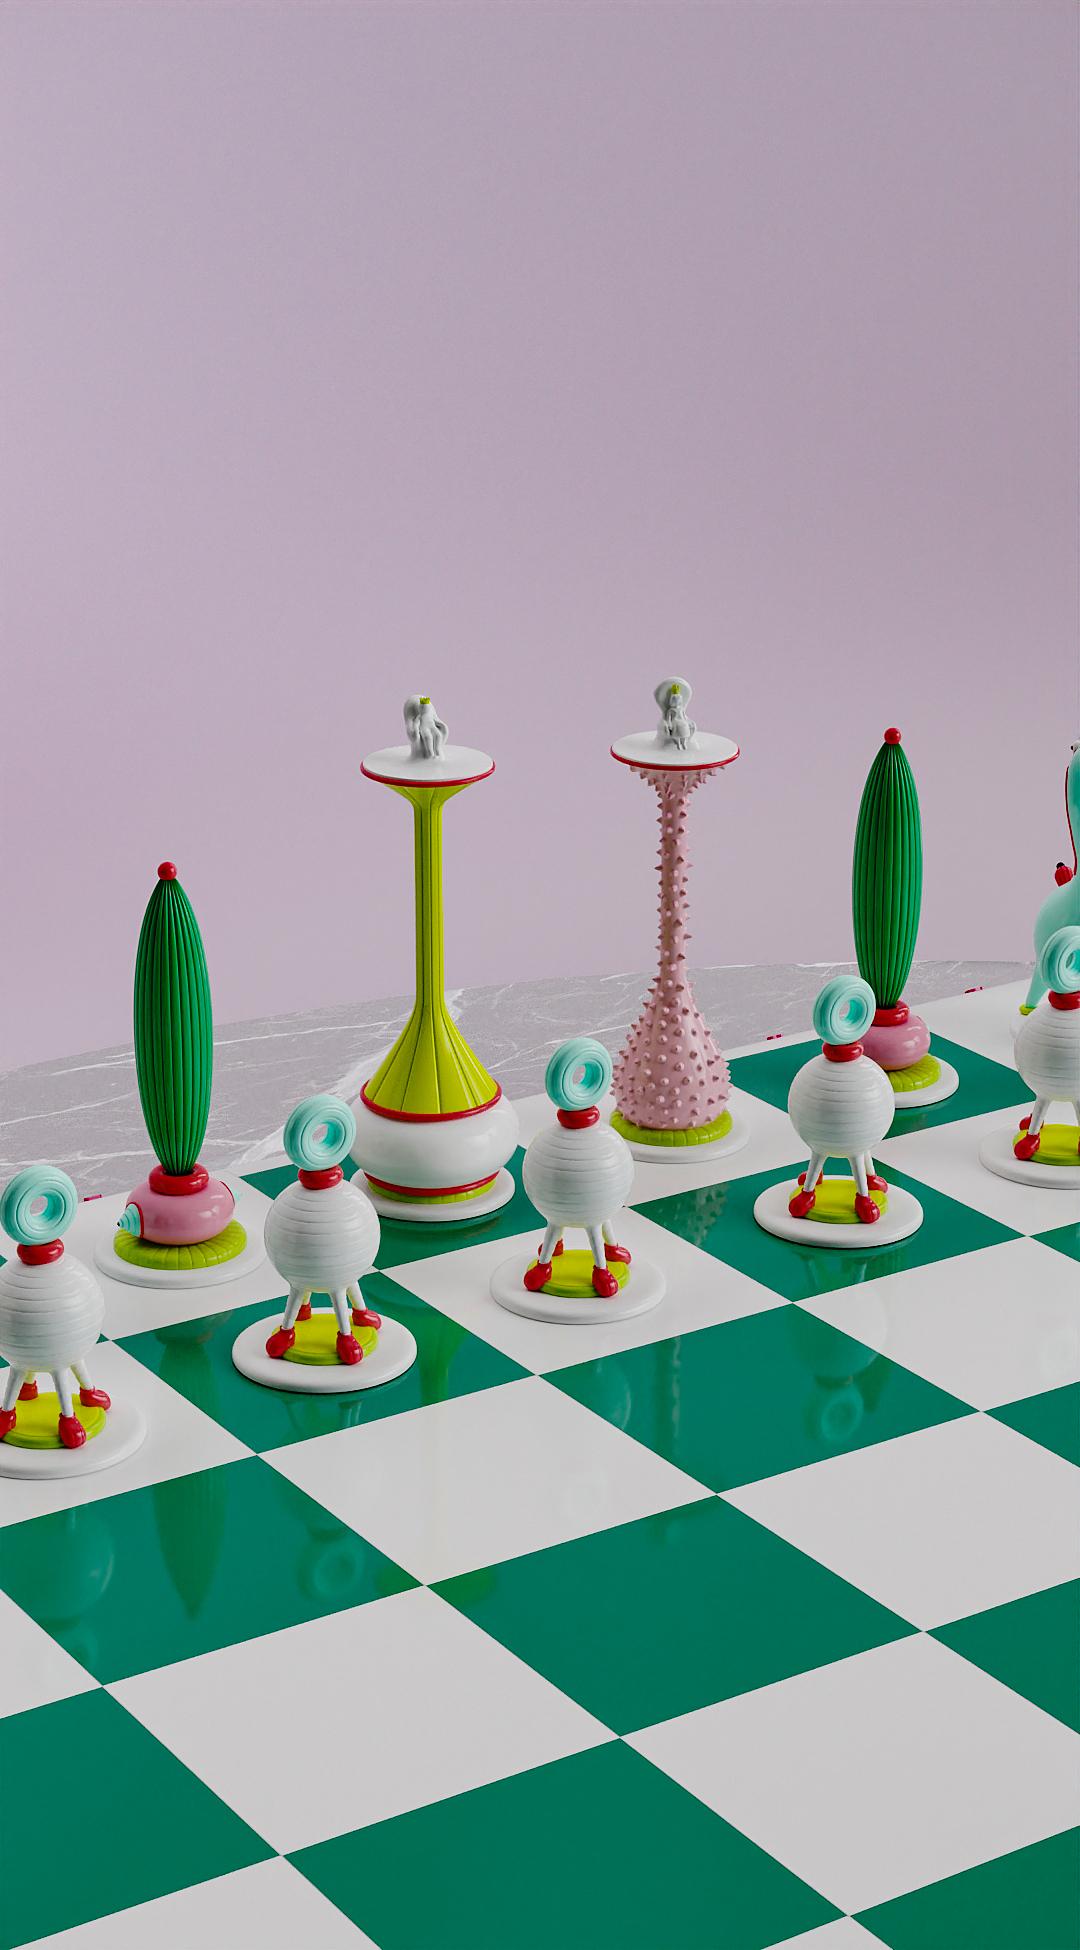 asterix chess set